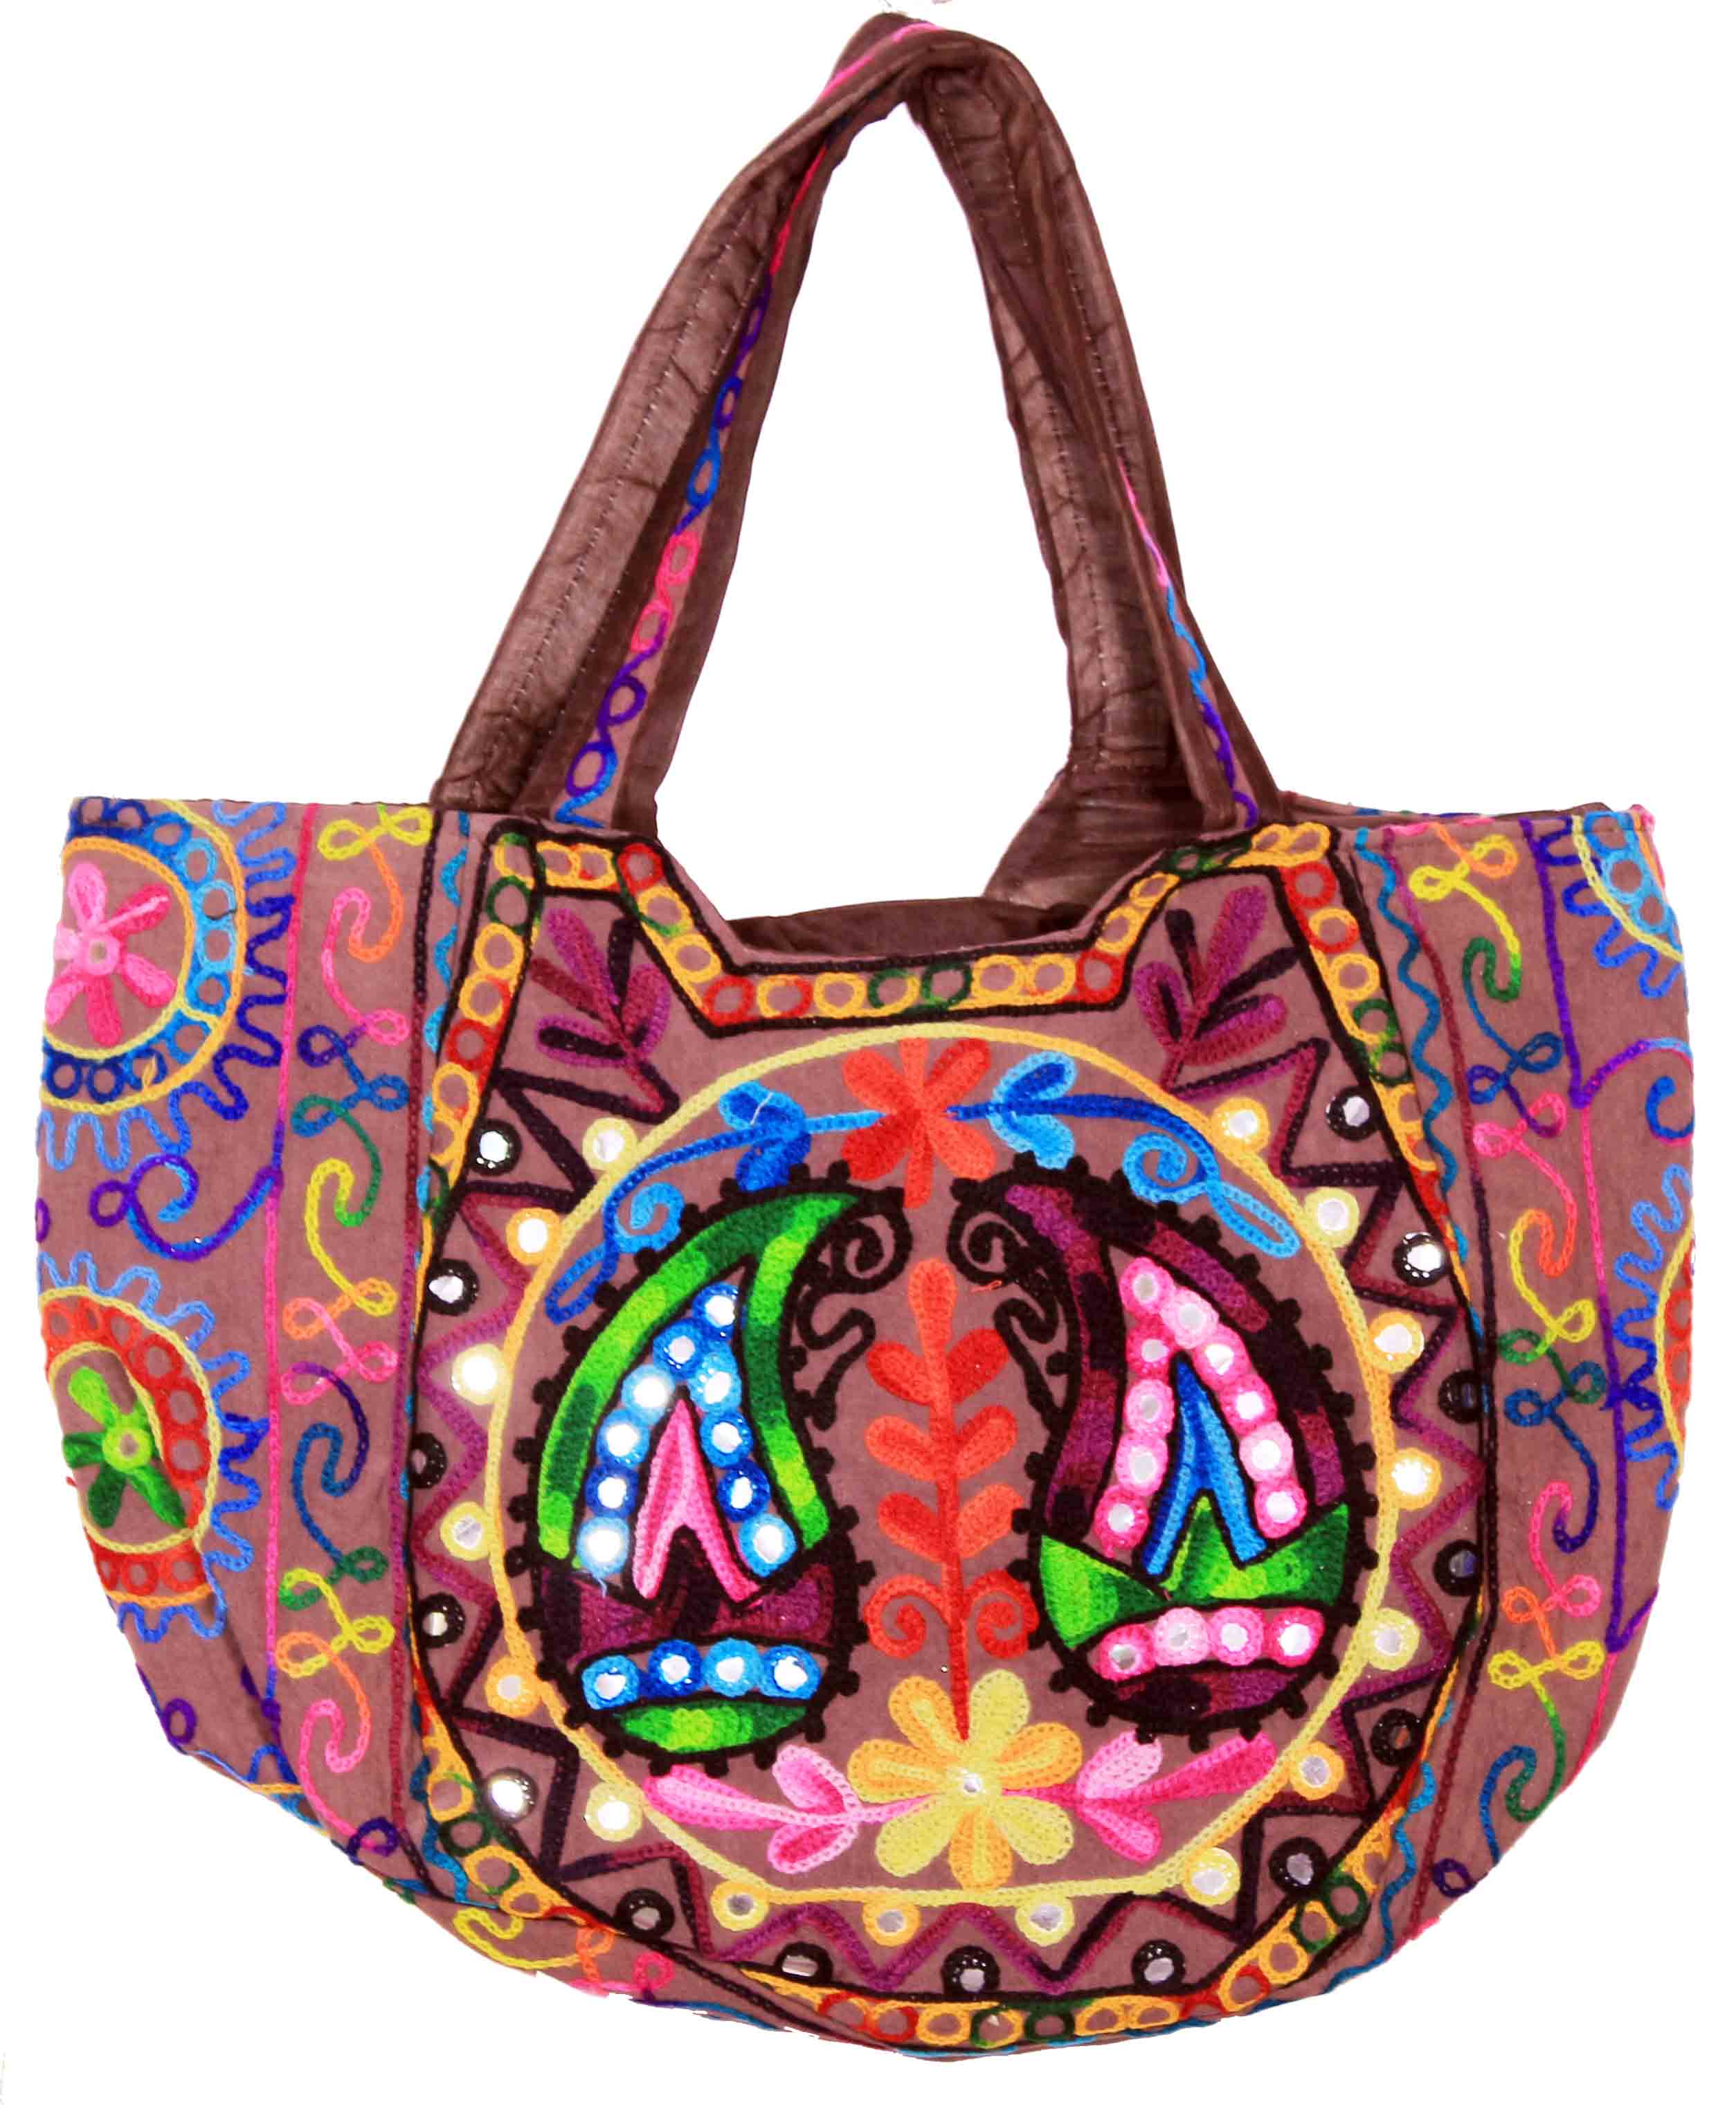 Handbags For Women - Buy Handbags For Women Online Starting at Just ₹183 |  Meesho